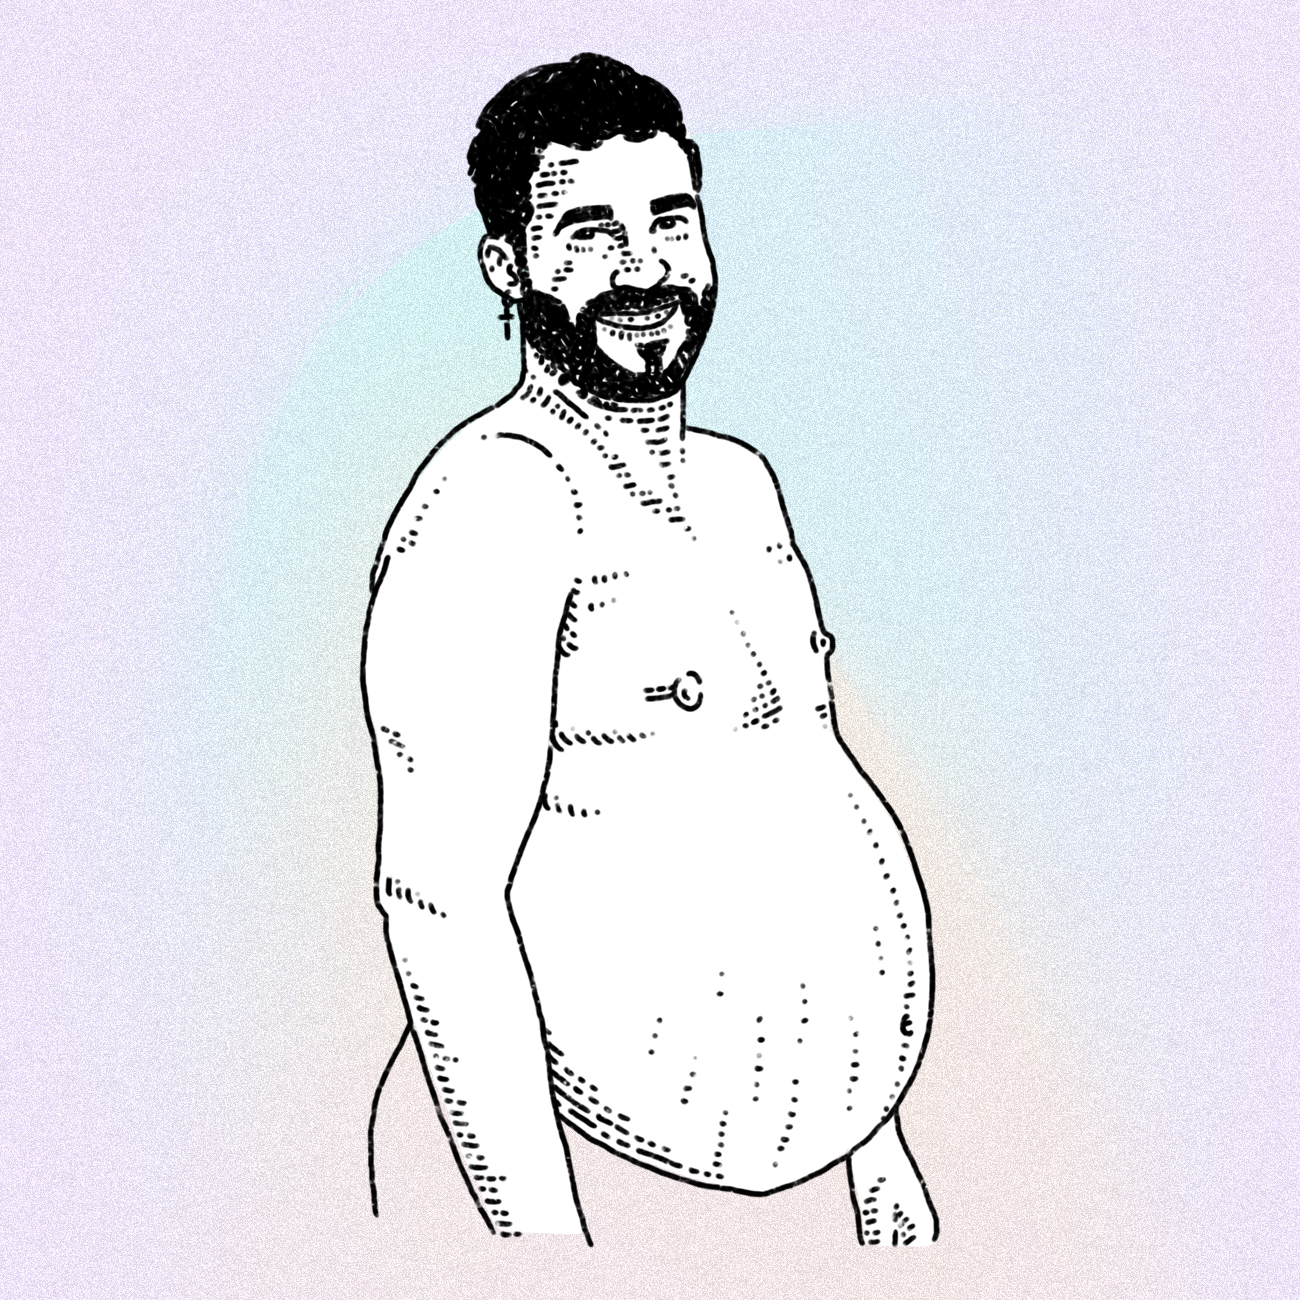 Pregnant transmasculine man